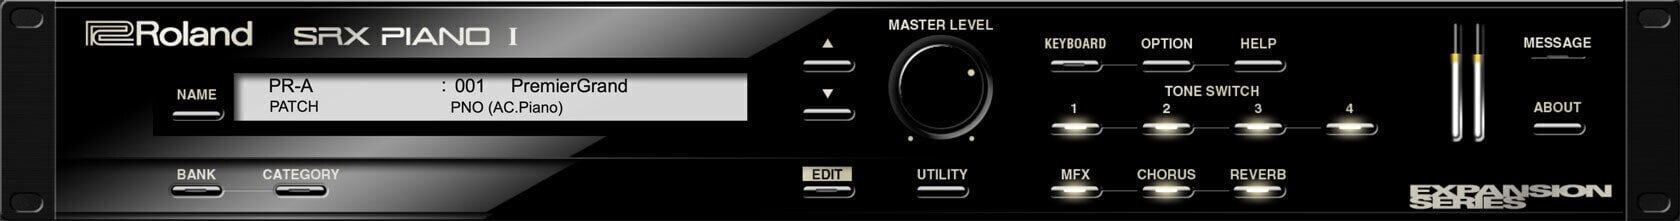 Logiciel de studio Instruments virtuels Roland SRX PIANO I Key (Produit numérique)